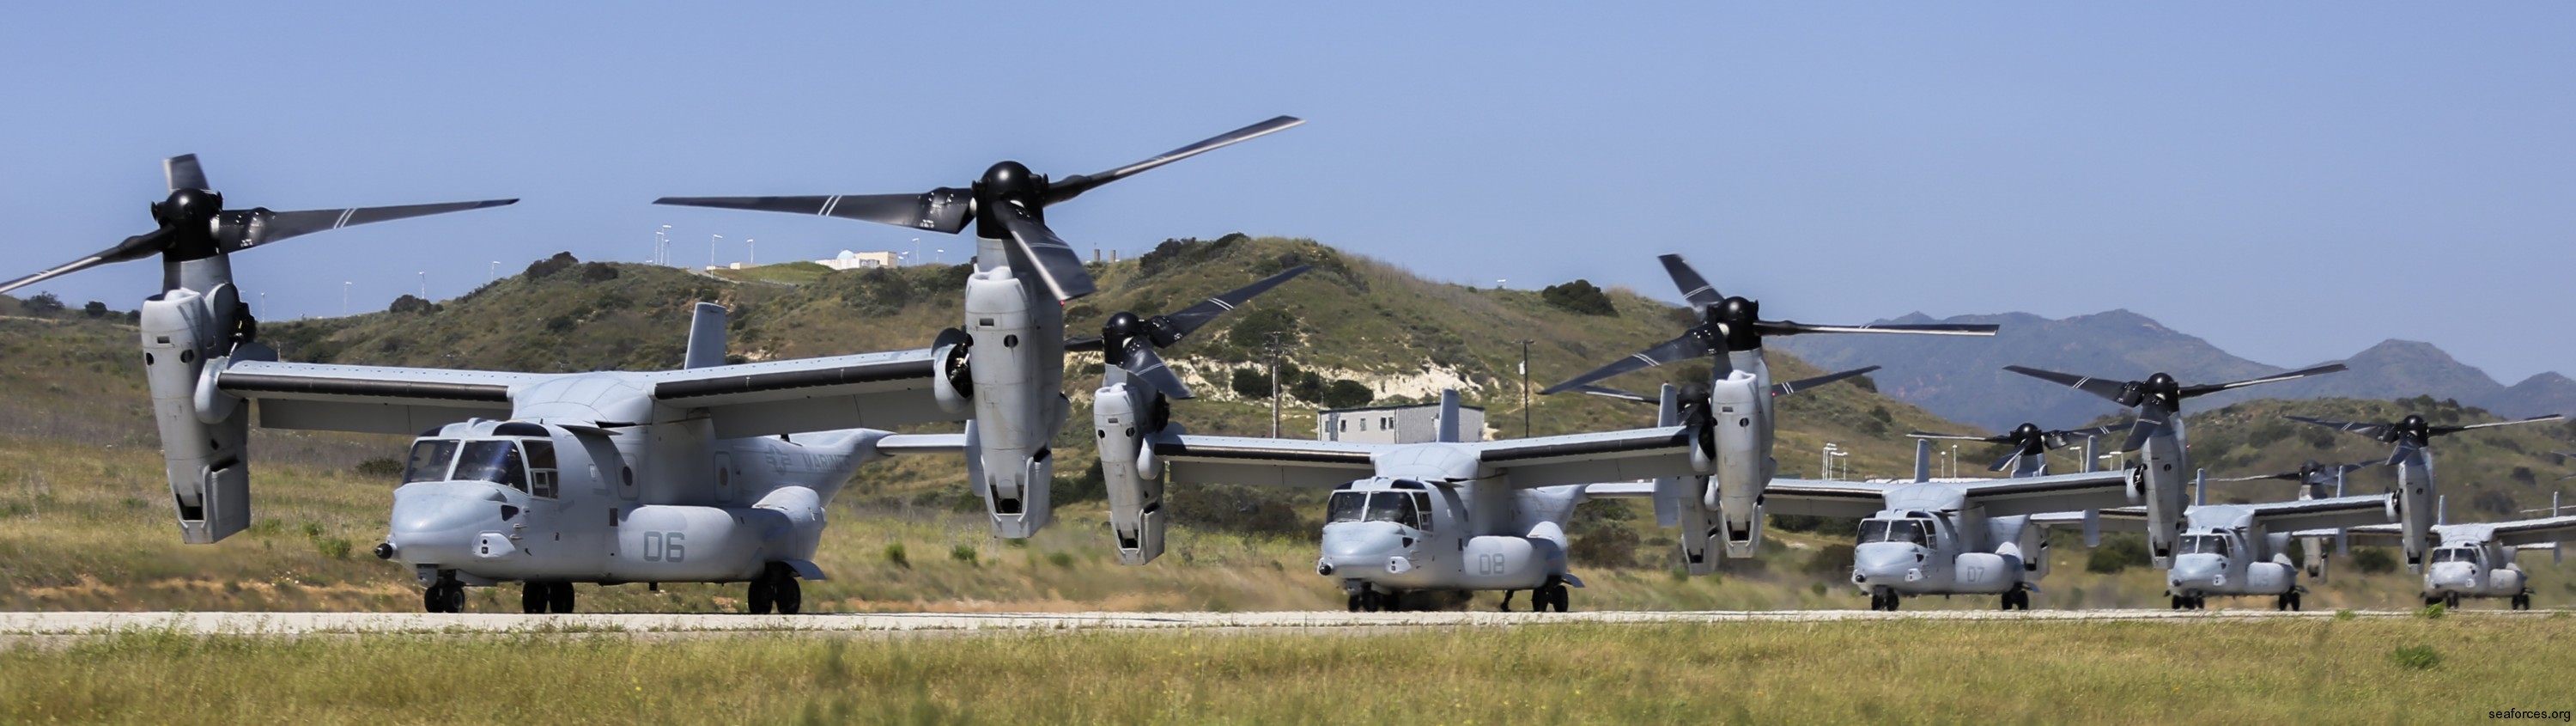 vmm-362 ugly angels marine medium tiltrotor squadron mv-22b osprey 03a mcb camp pendleton california